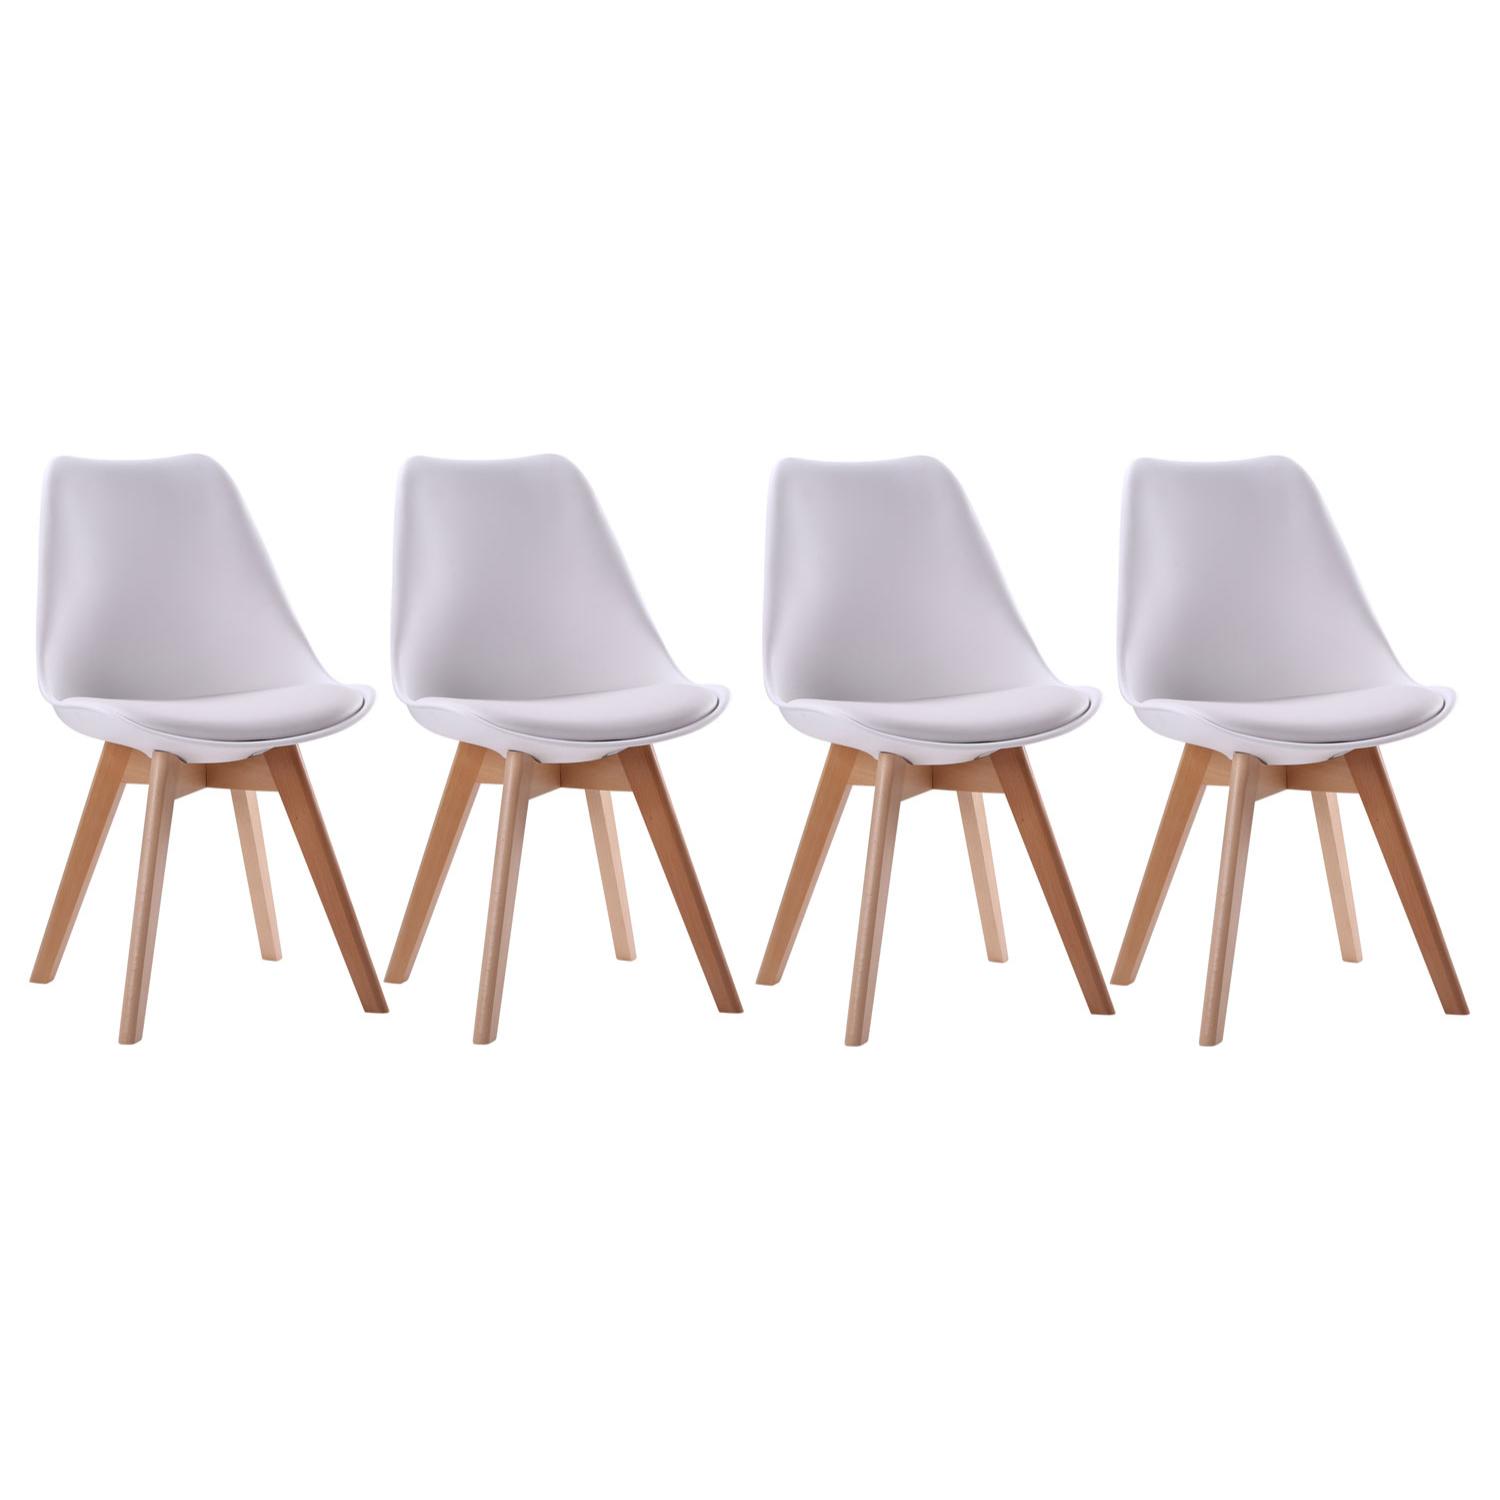 HAPPY GARDEN - Lot de 4 chaises scandinaves NORA blanches avec